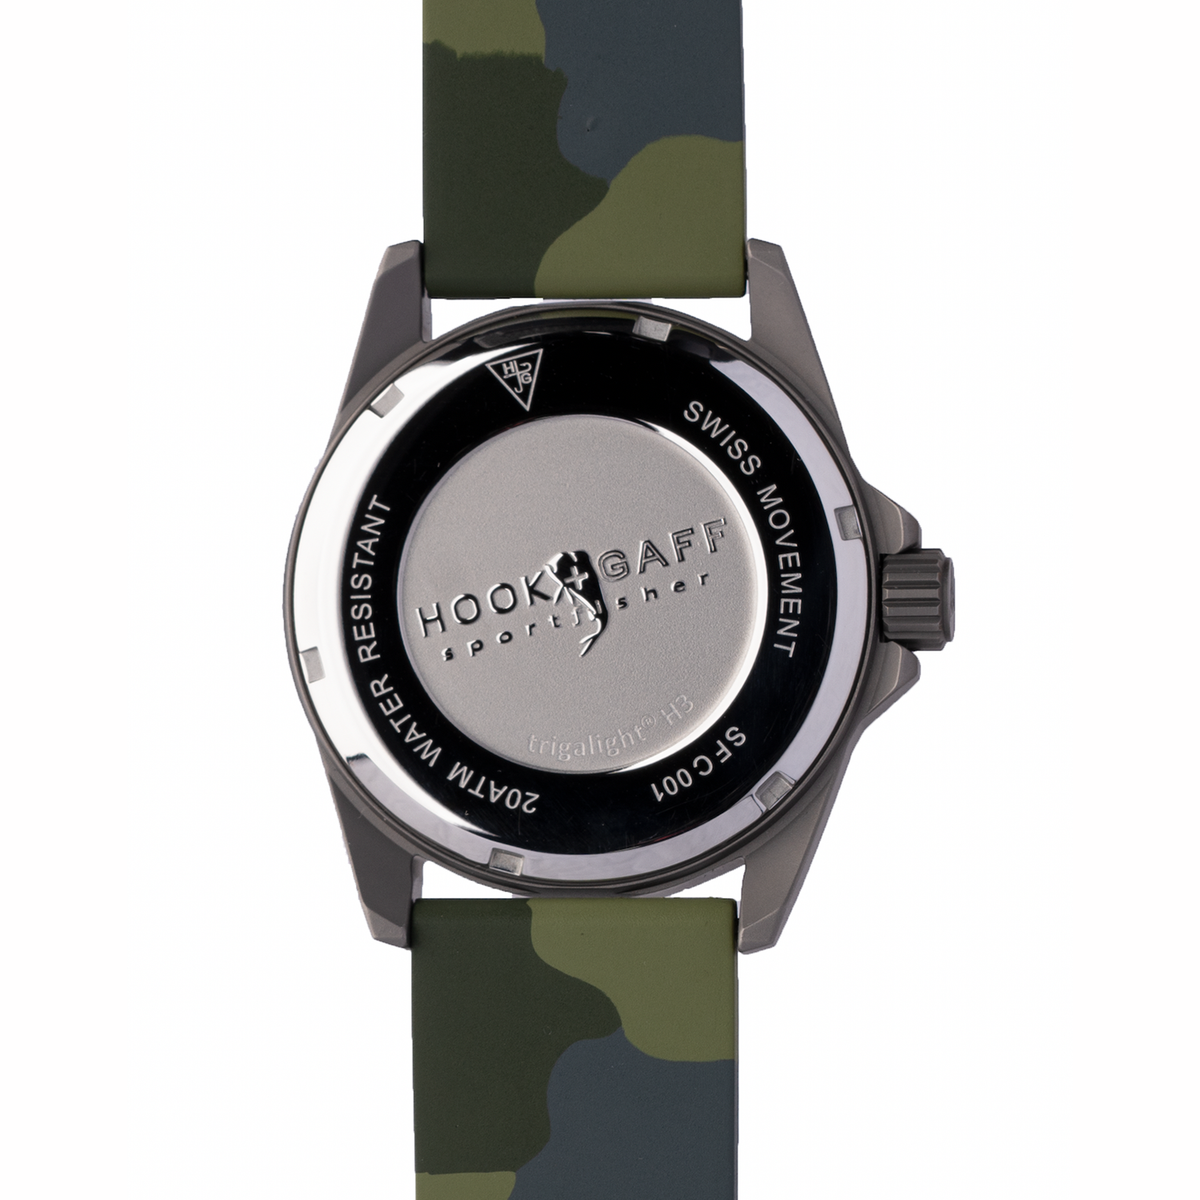 Sportfisher Black Face Watch - Black on Black Watch – Hook+Gaff